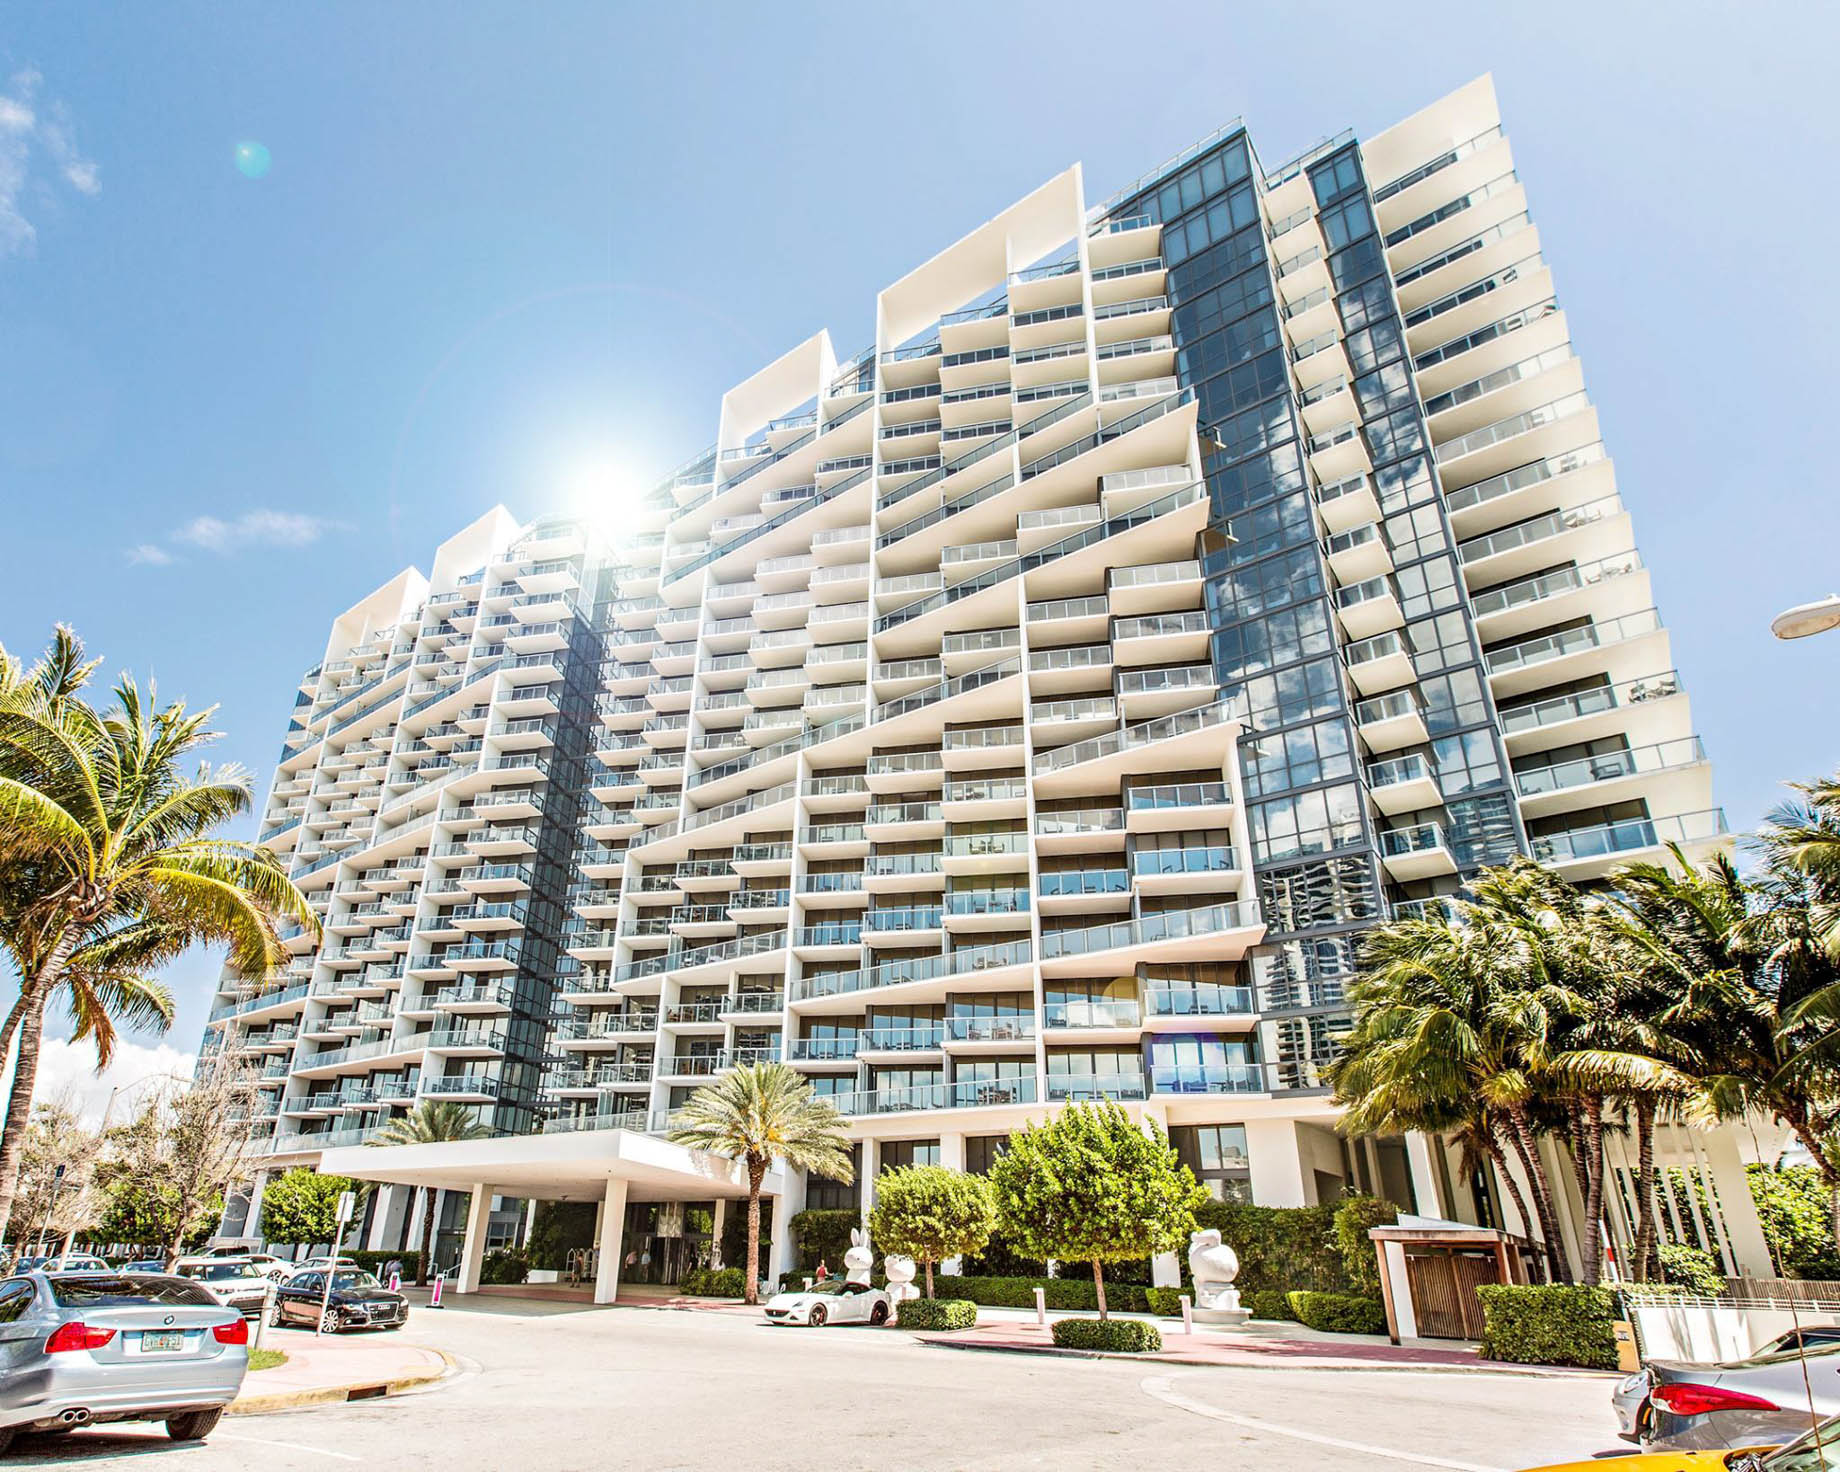 W South Beach Hotel – Miami Beach, FL, USA – Hotel Exterior Architecture